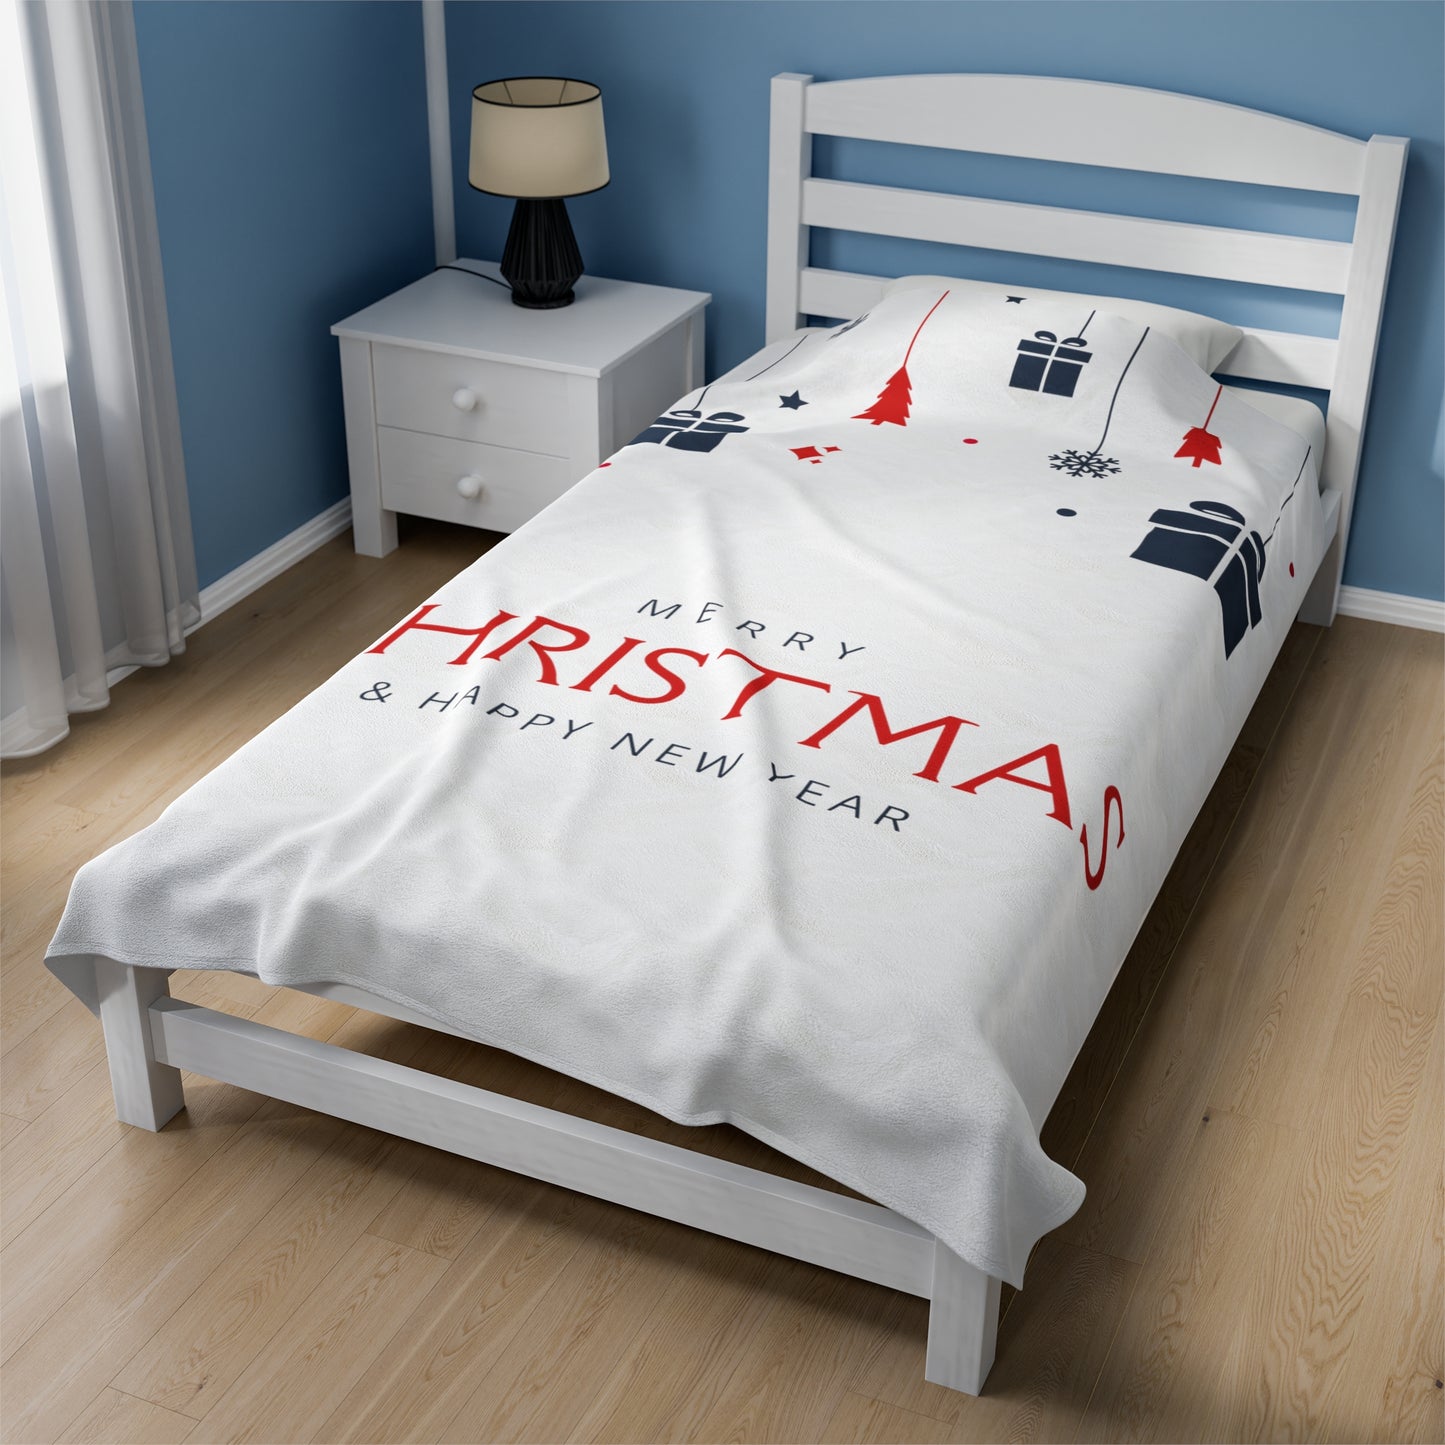 Merry Christmas & Happy New Year Printed Velveteen Plush Blanket, White